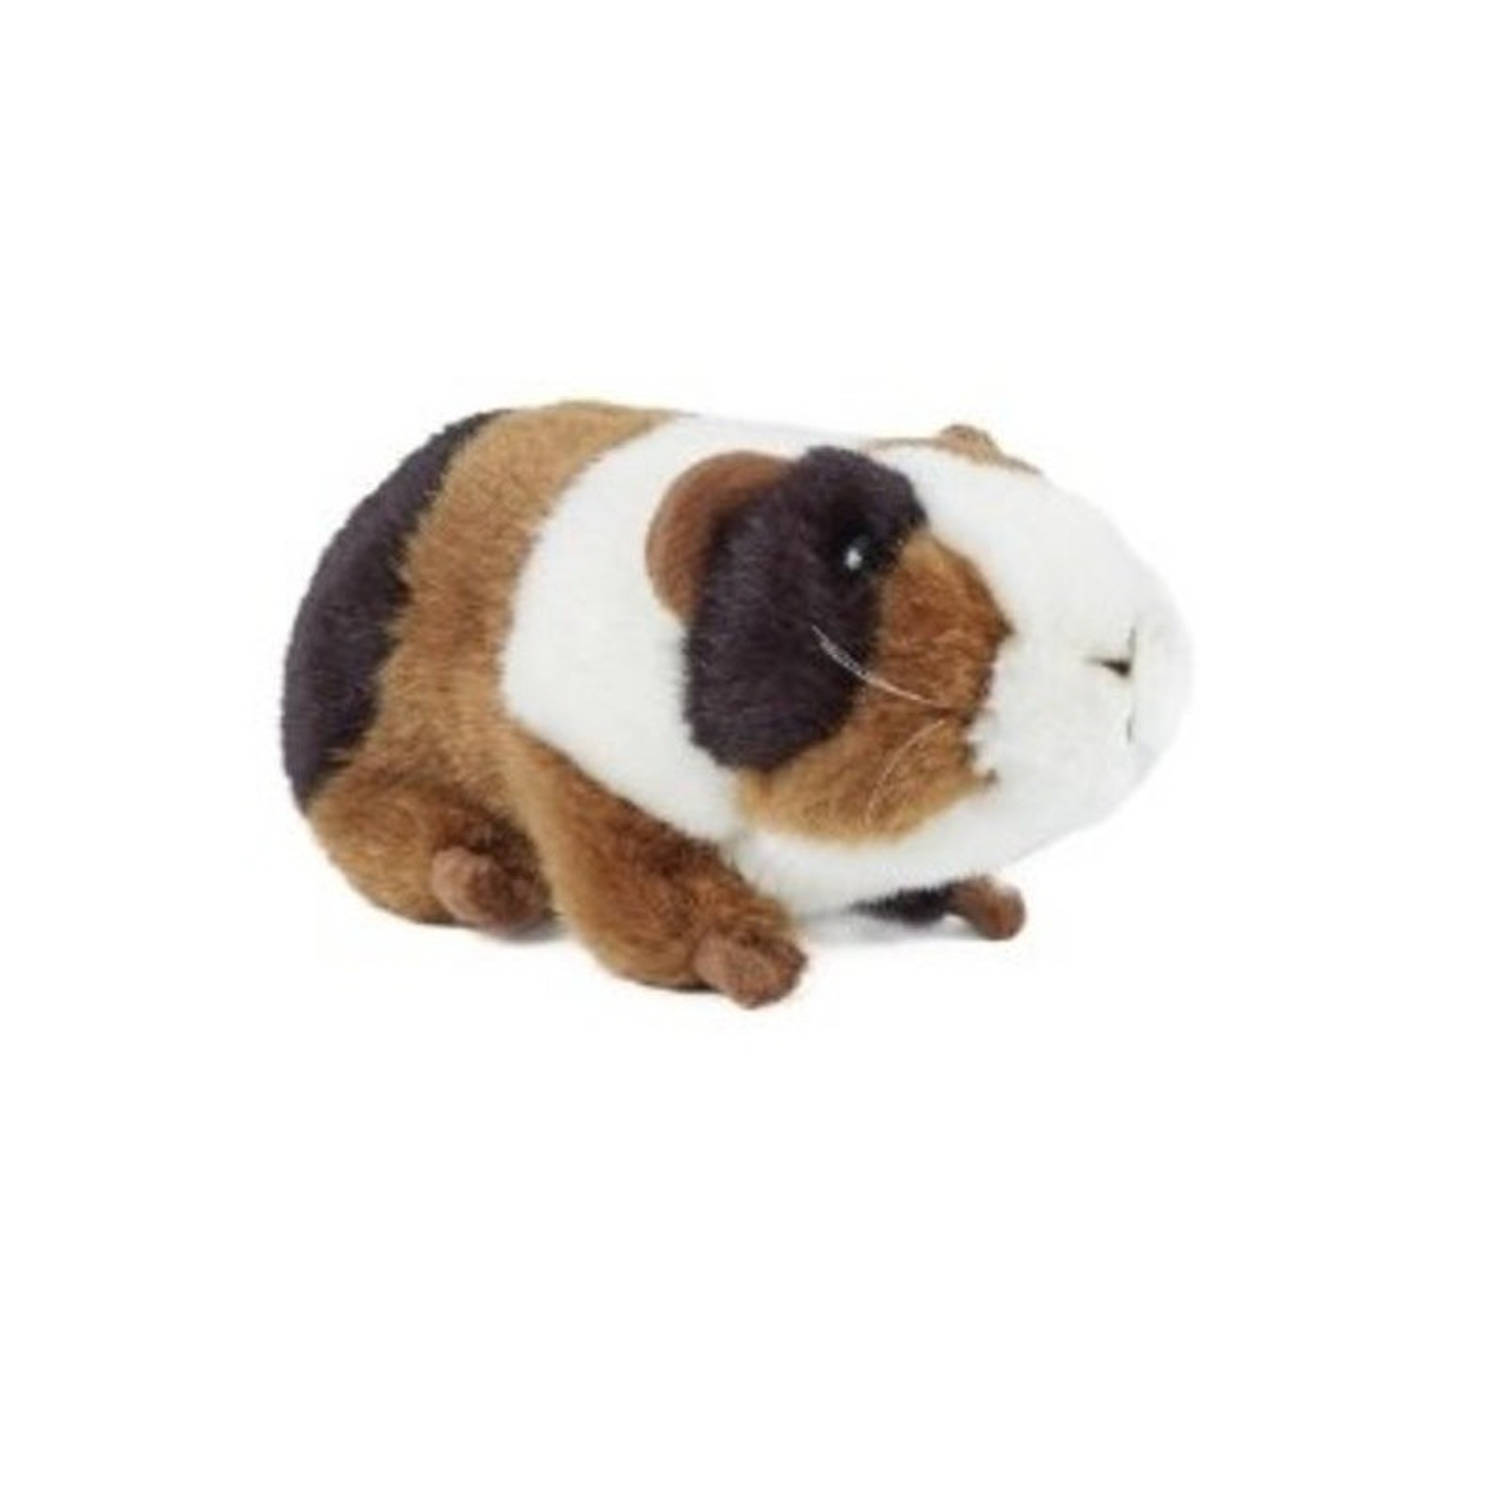 Vervreemding vleet in de rij gaan staan Pluche Cavia knuffel 18 cm - Cavia huisdieren knuffels - Speelgoed | Blokker